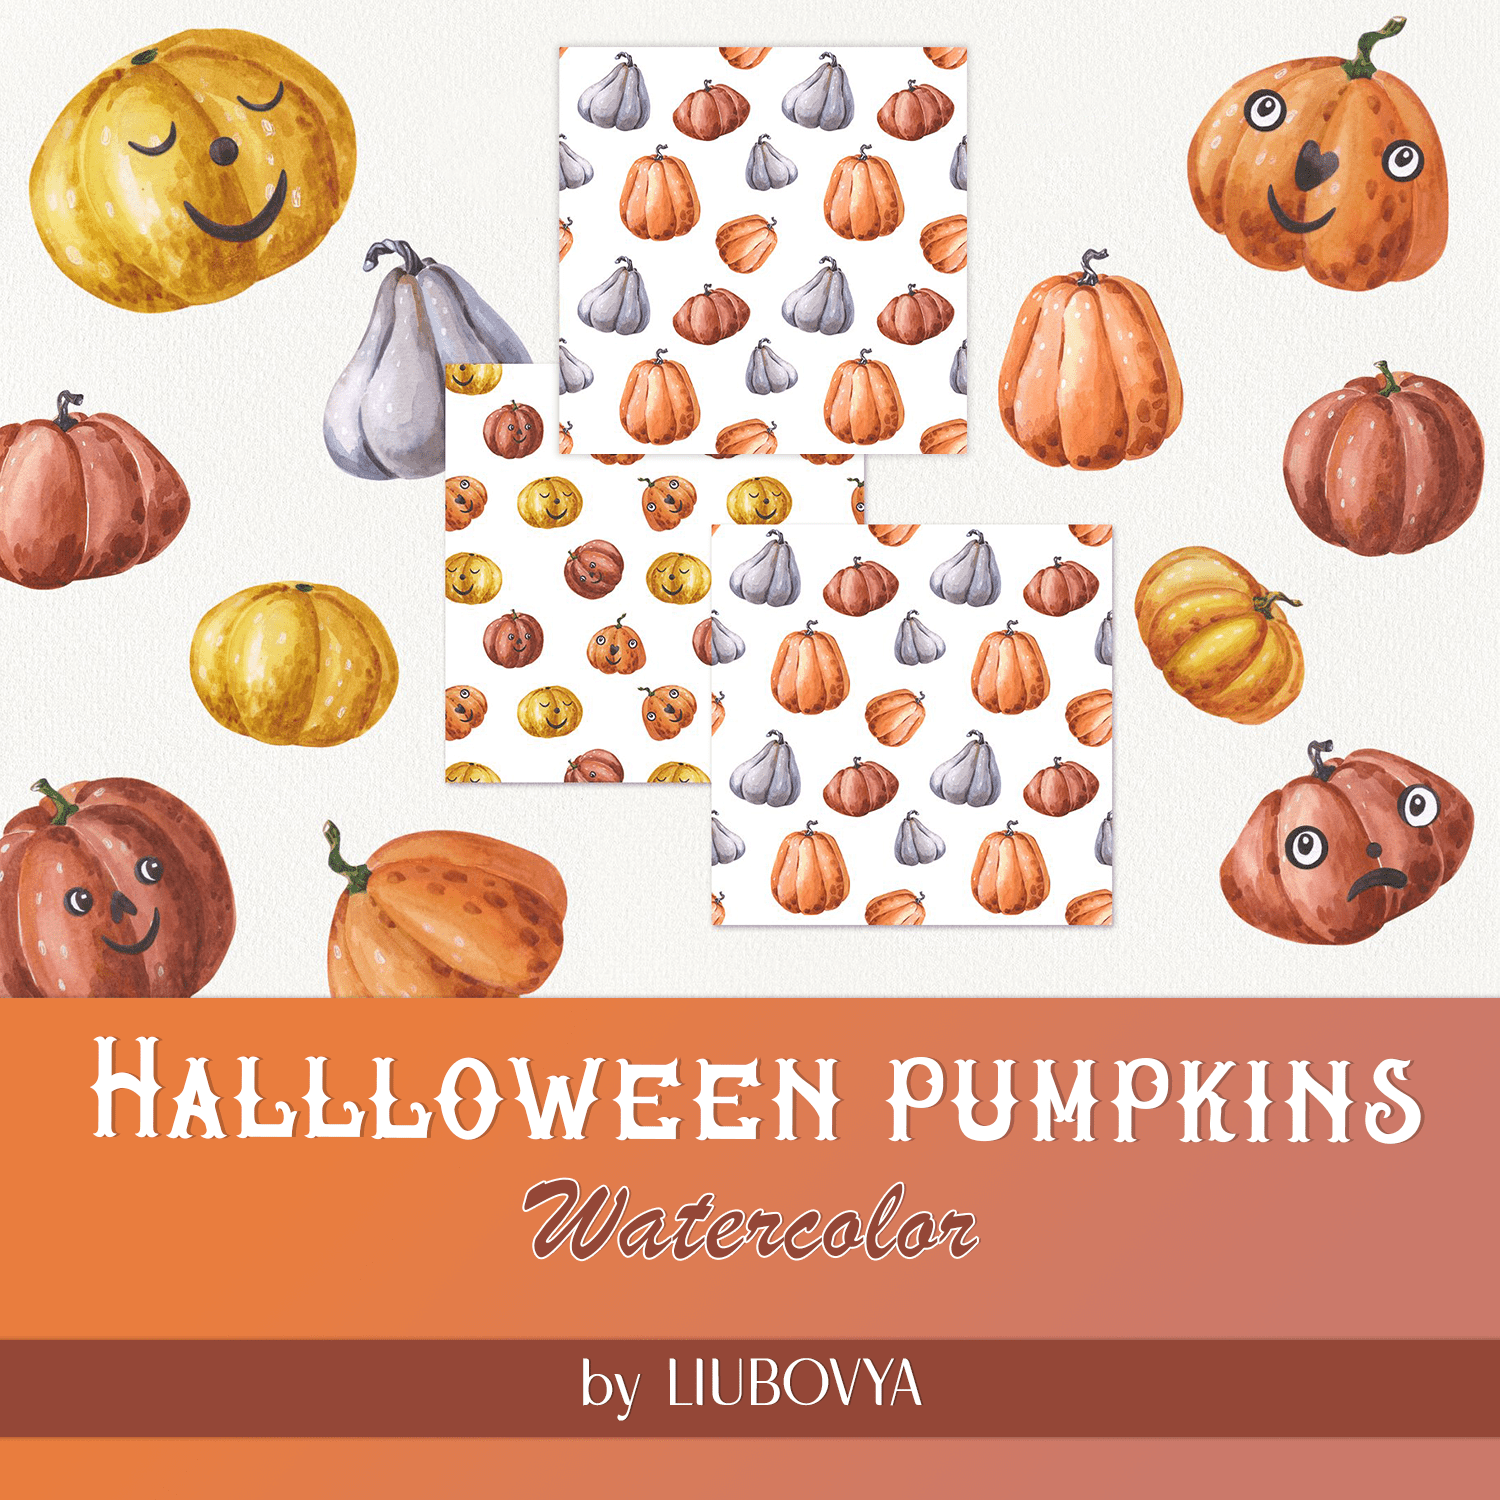 Hallloween pumpkins. Watercolor cover.